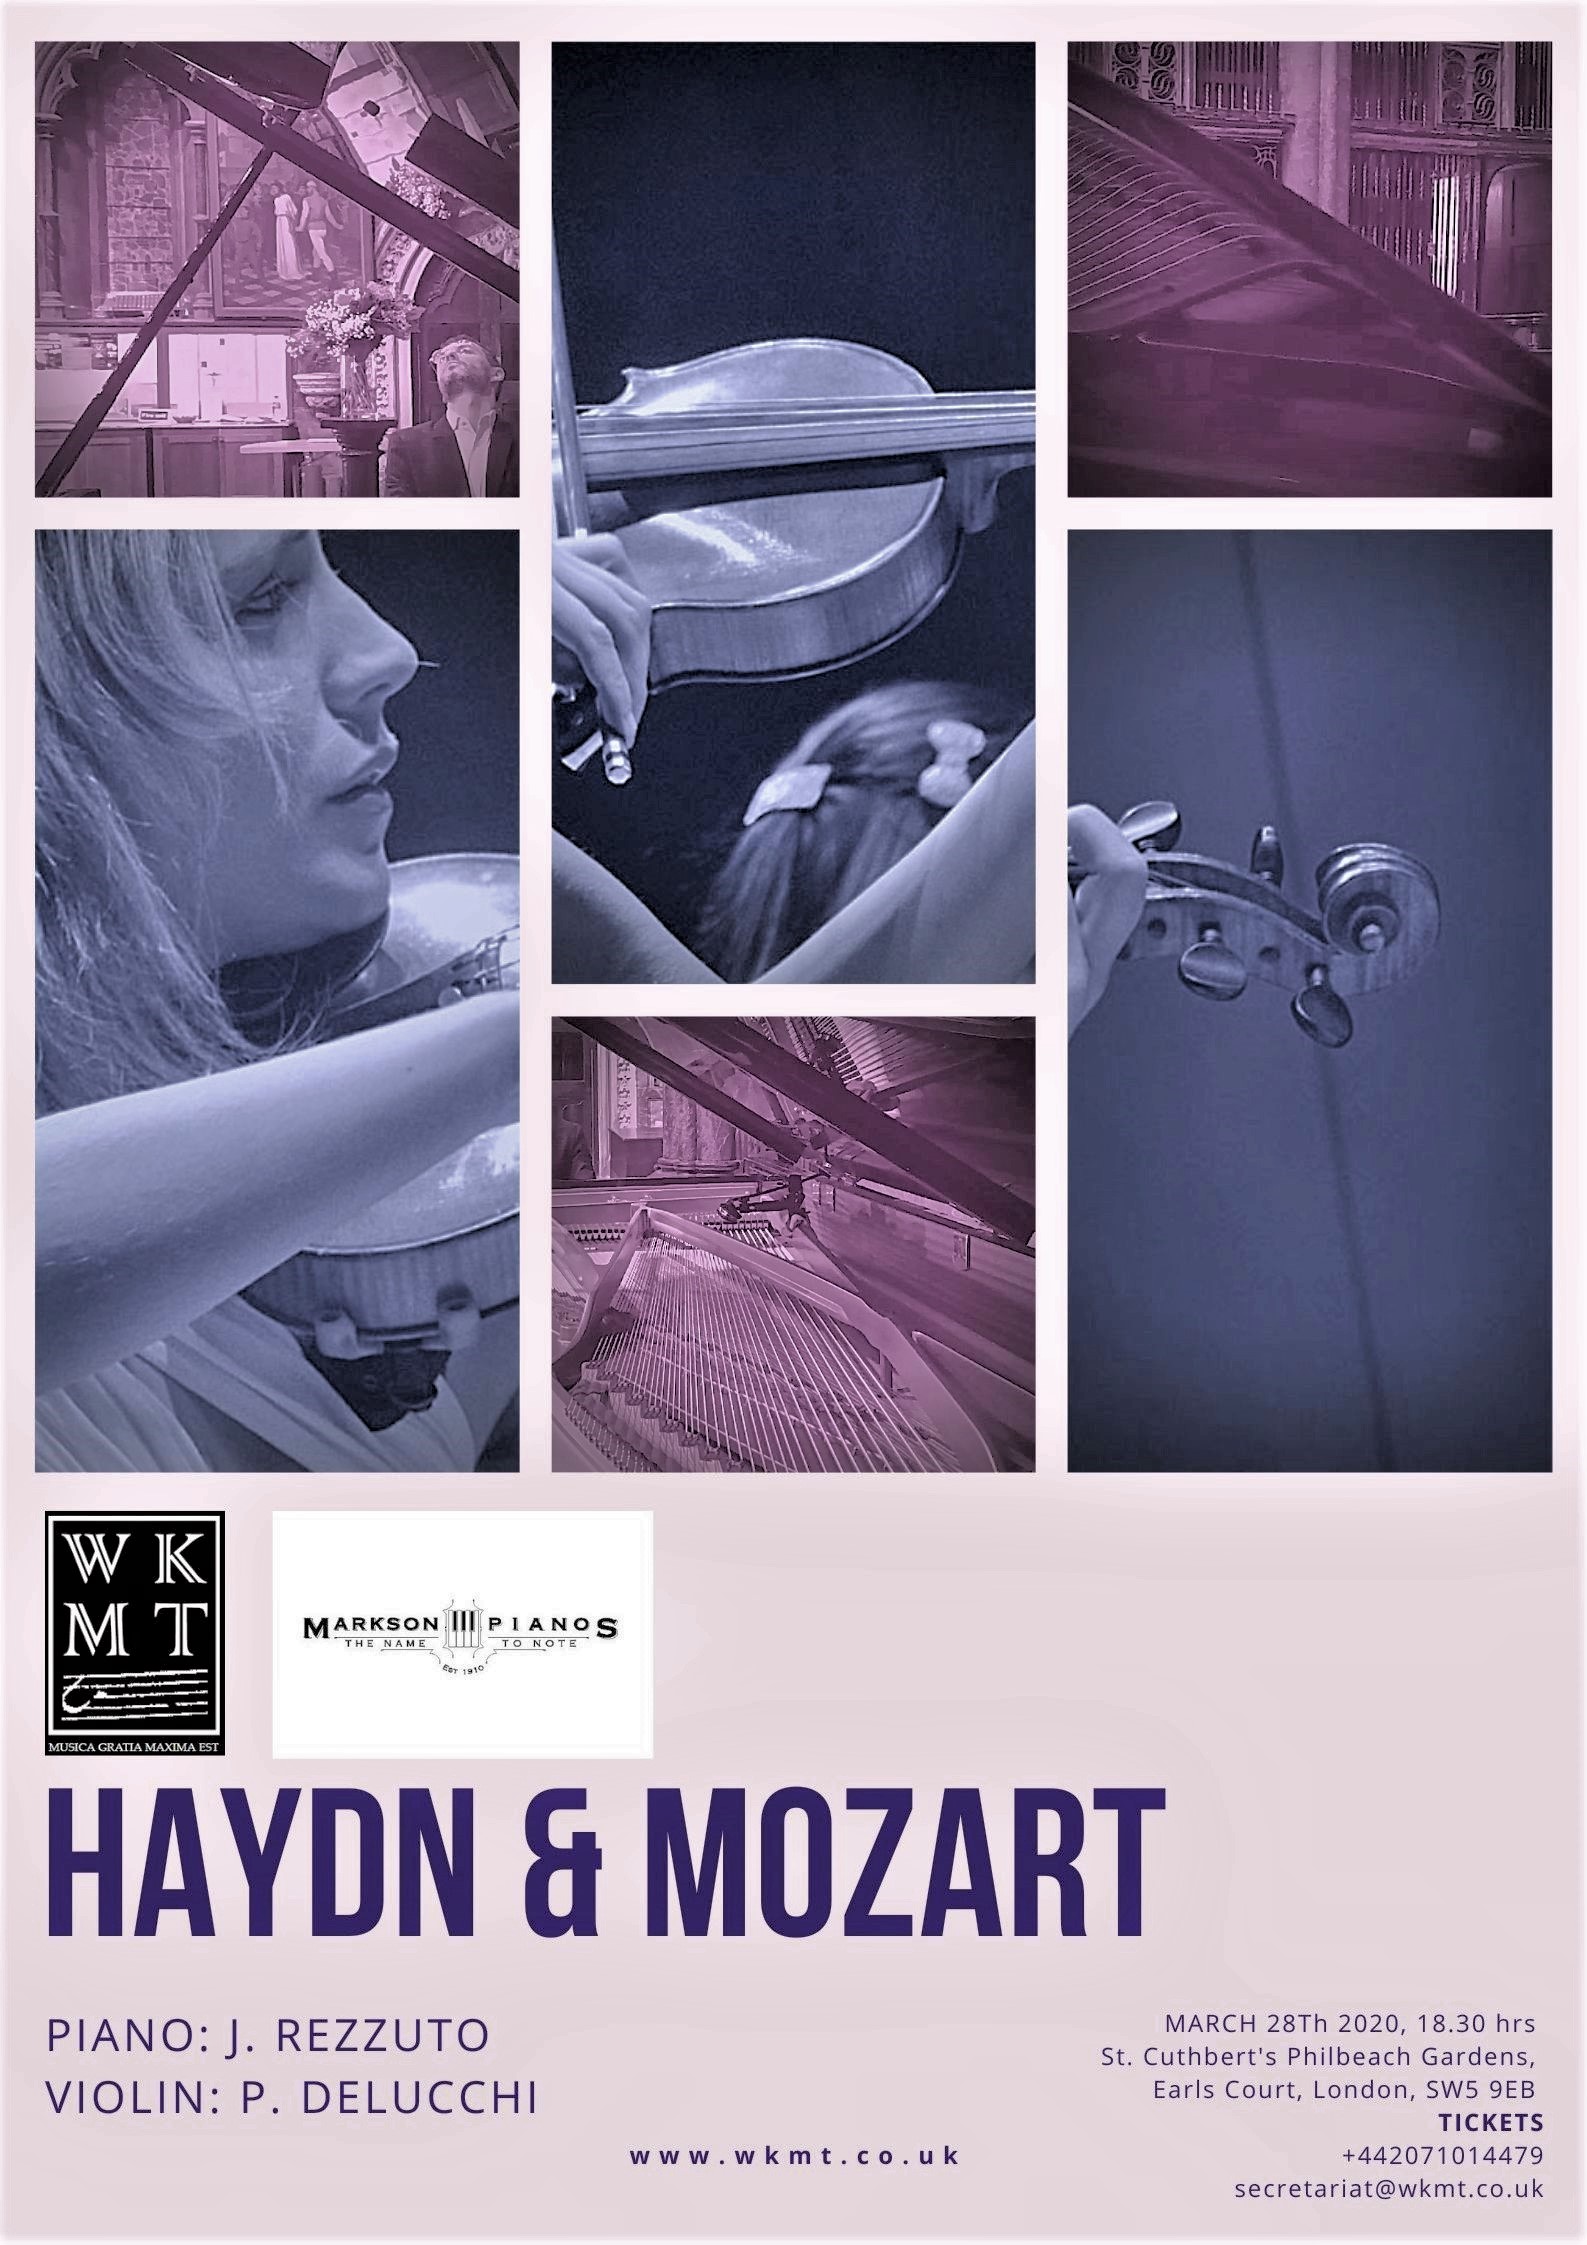 Recording Mozart and Joseph Haydn famous concertos